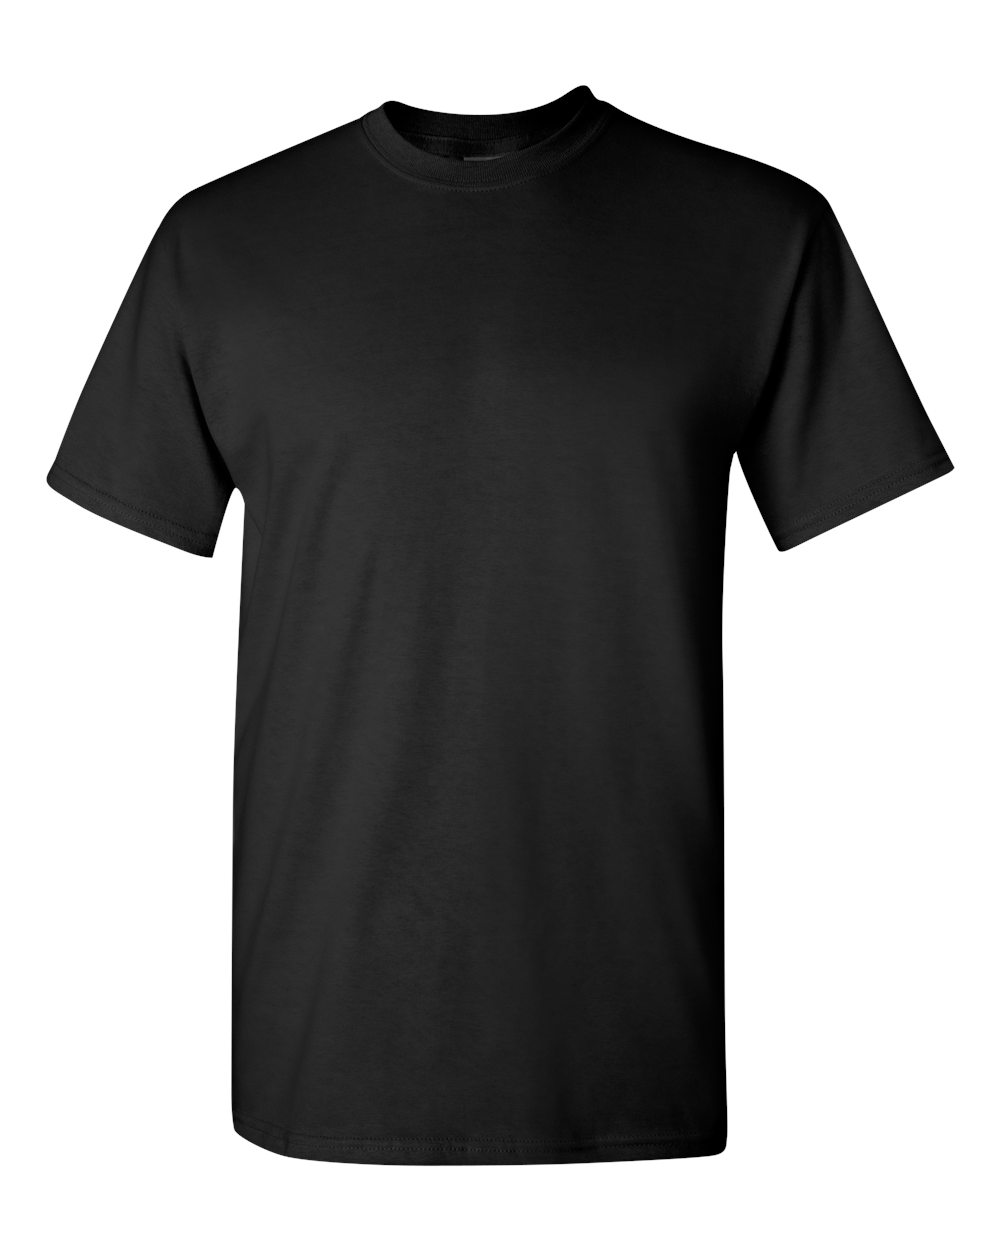 Mostly Drug Free Adult Unisex Cotton T-Shirt | Cryin Creek